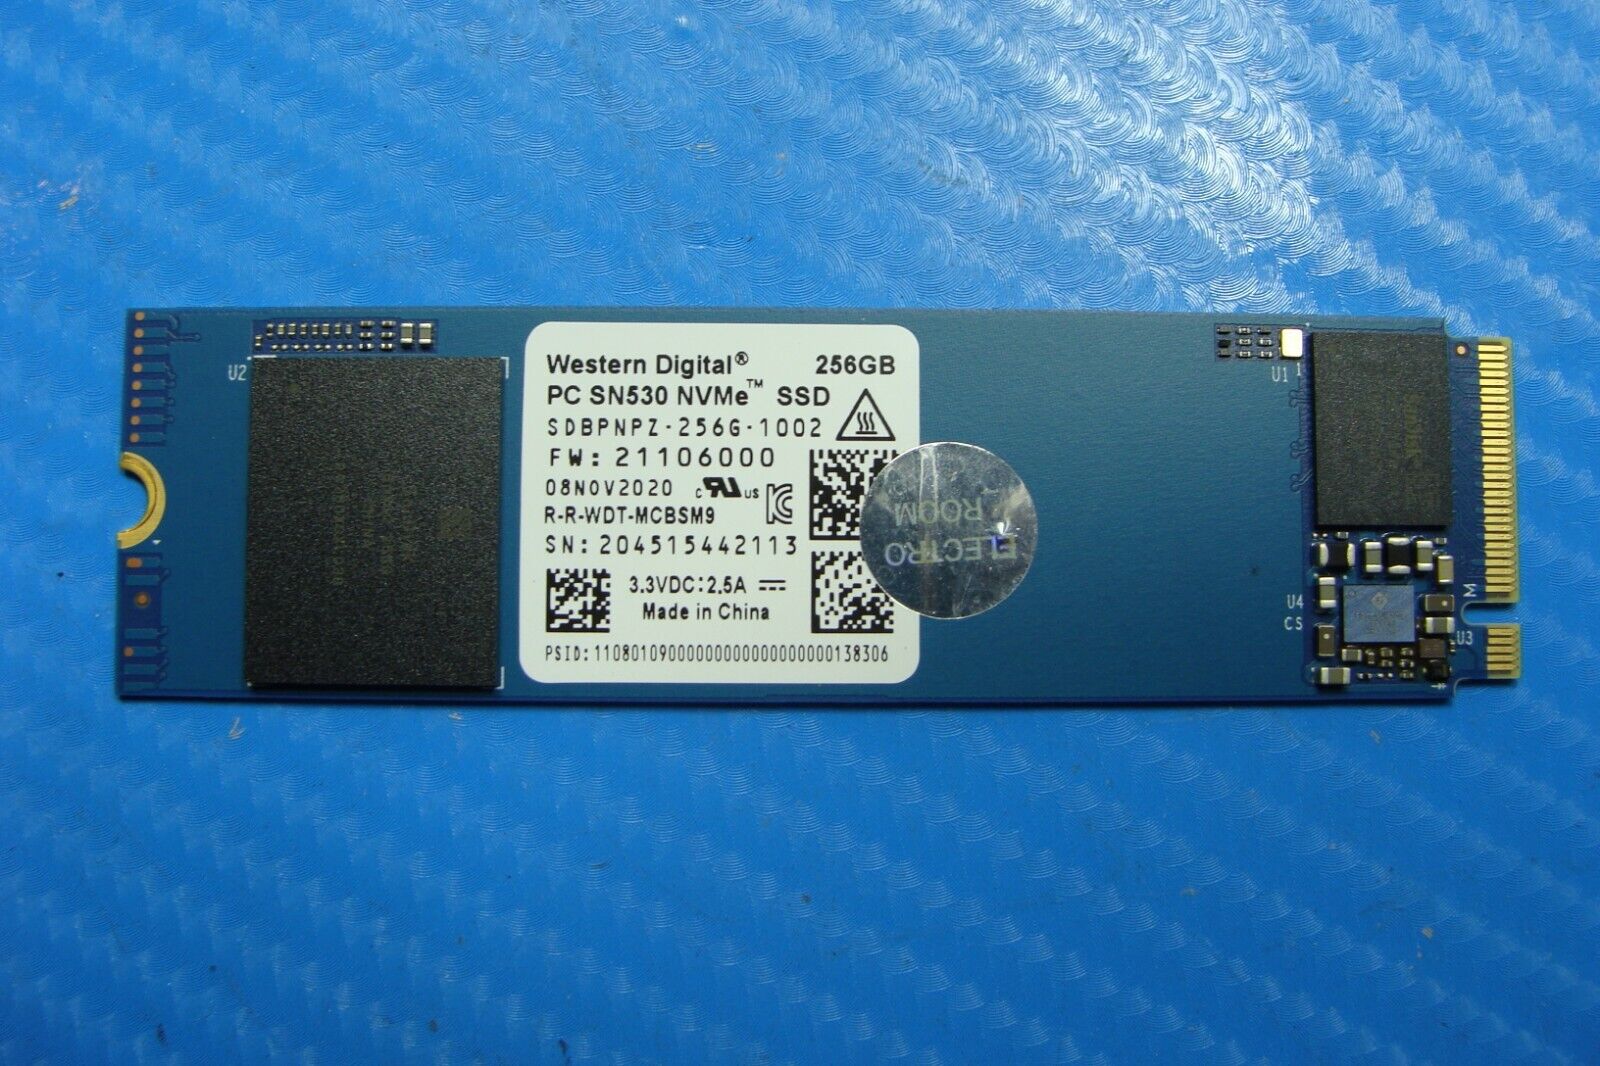 Asus x512ja WD PC SN530 256Gb NVMe M.2 SSD Solid State Drive sdbpnpz-256g-1002